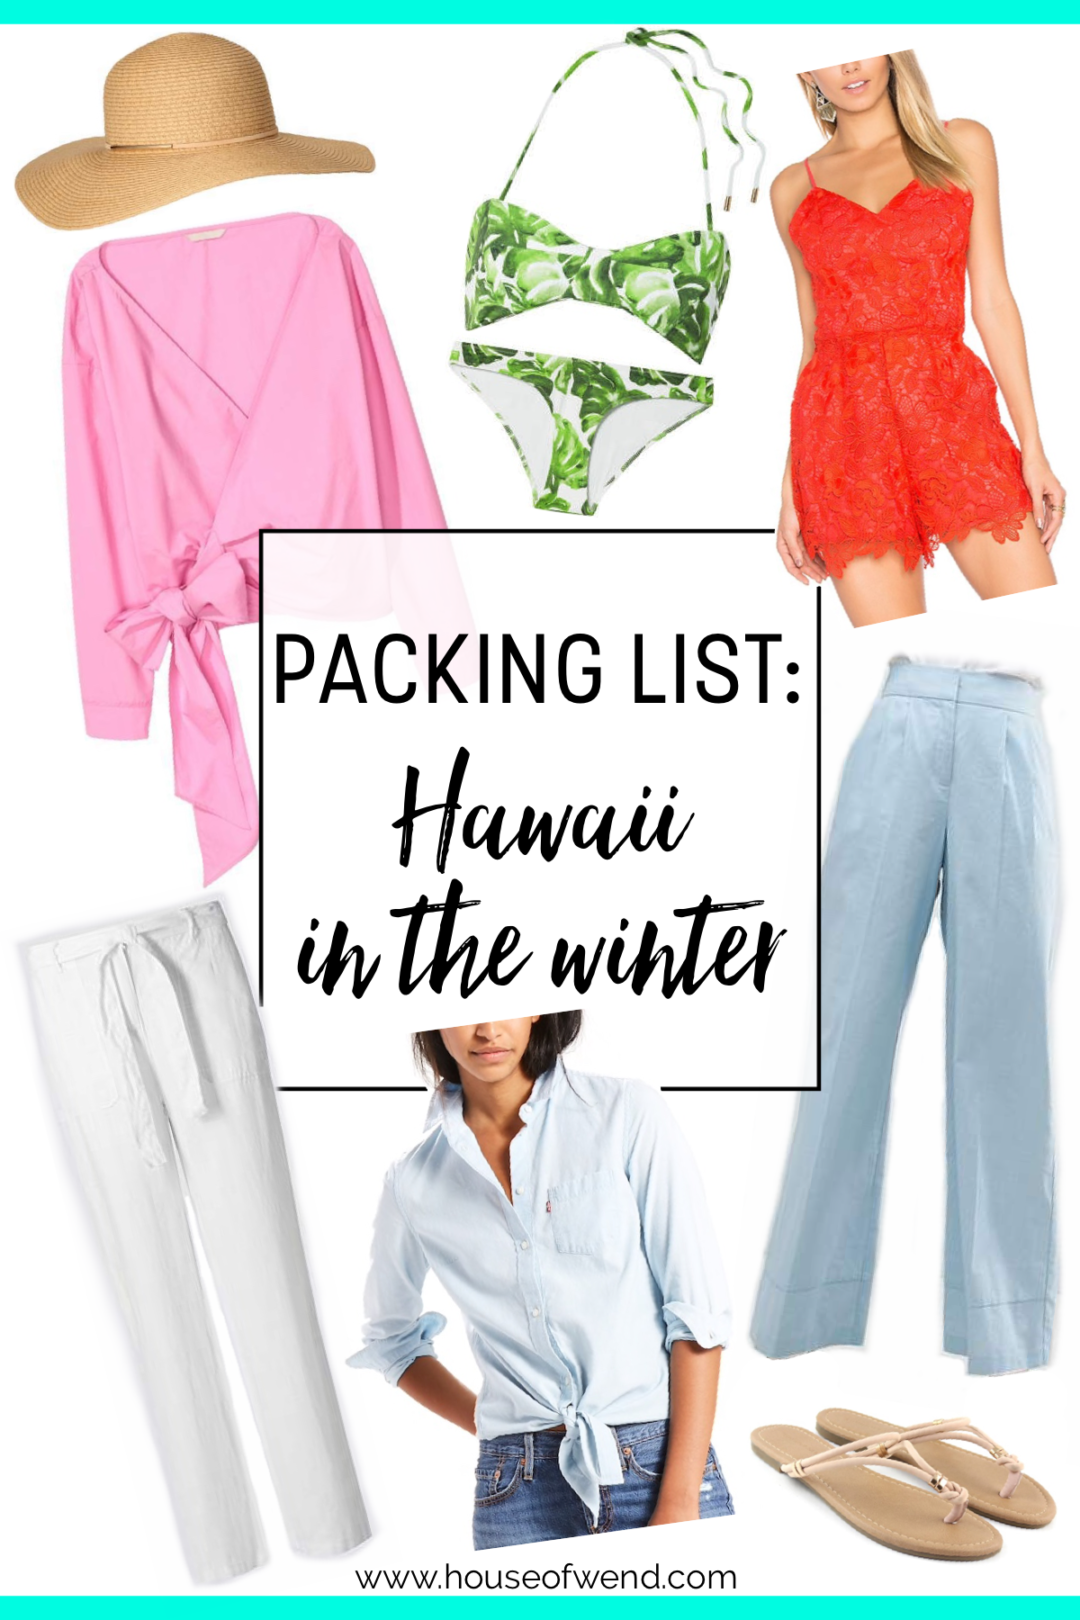 Hawaii packing list